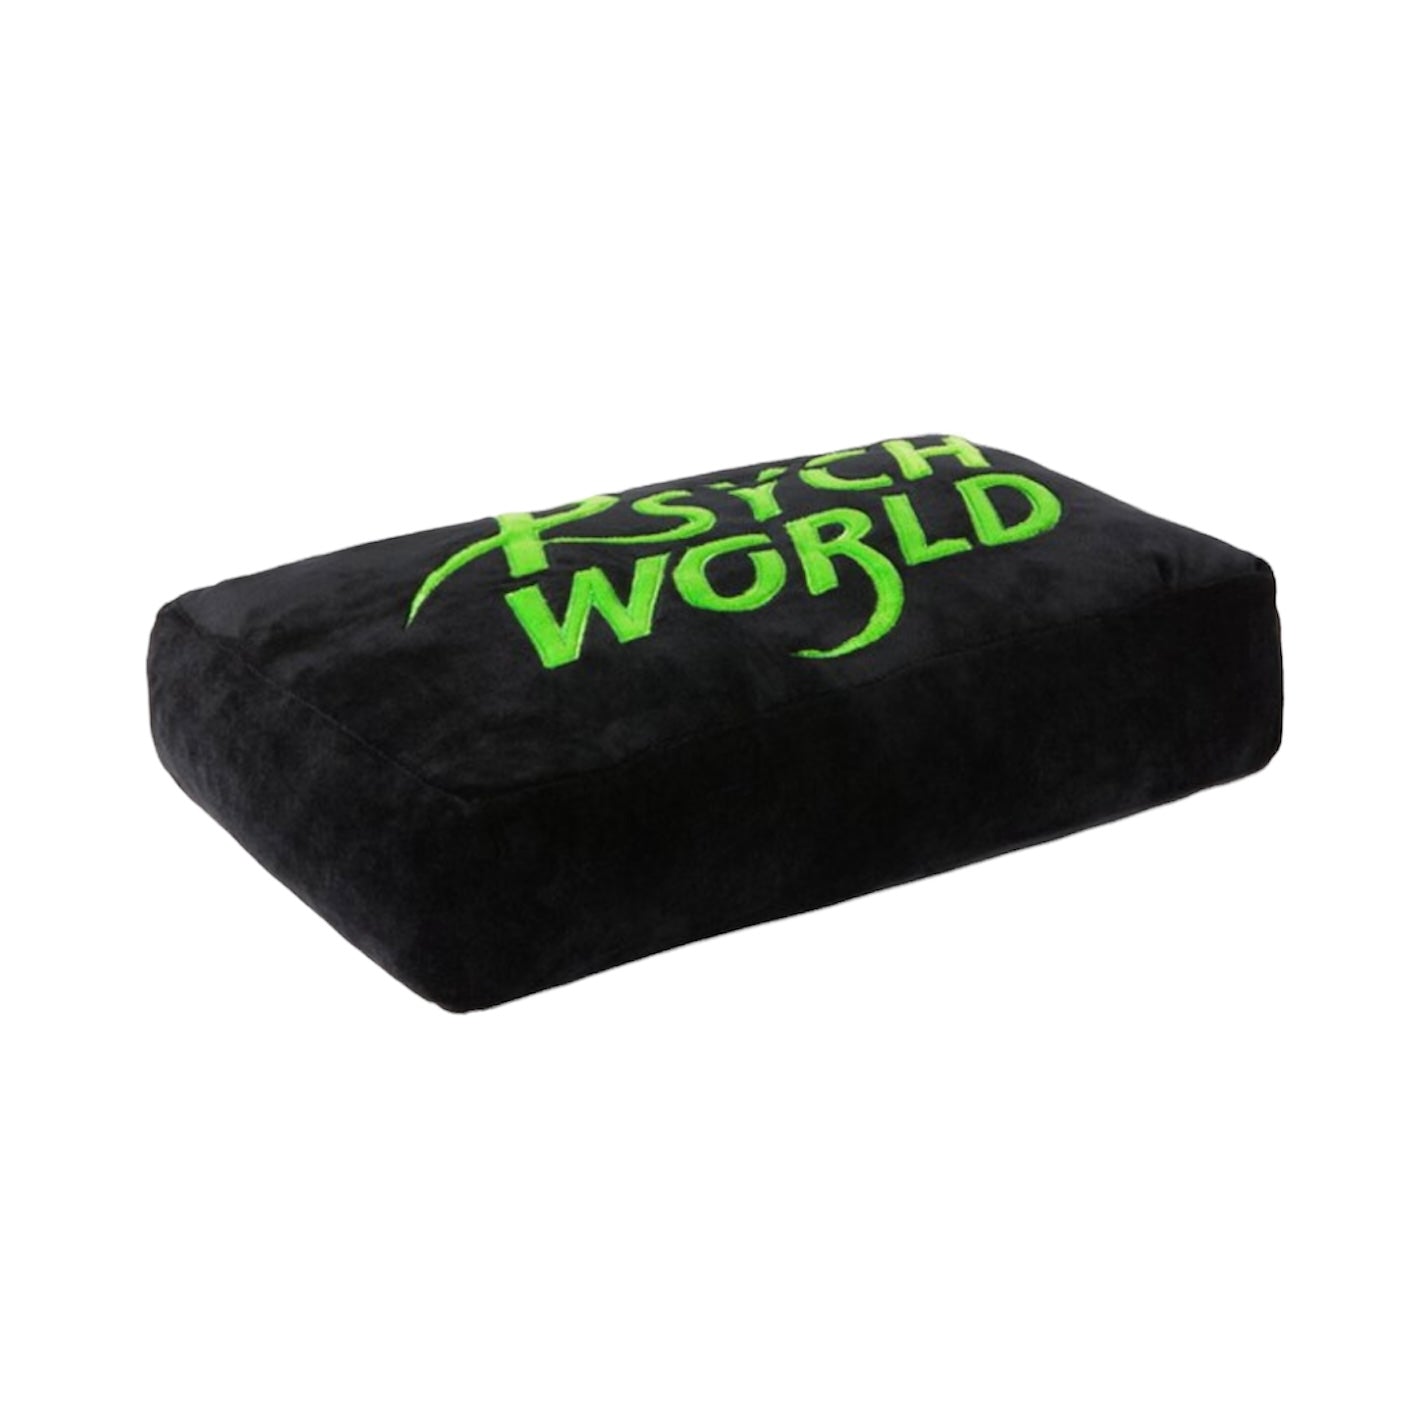 Psychworld Logo Pillow